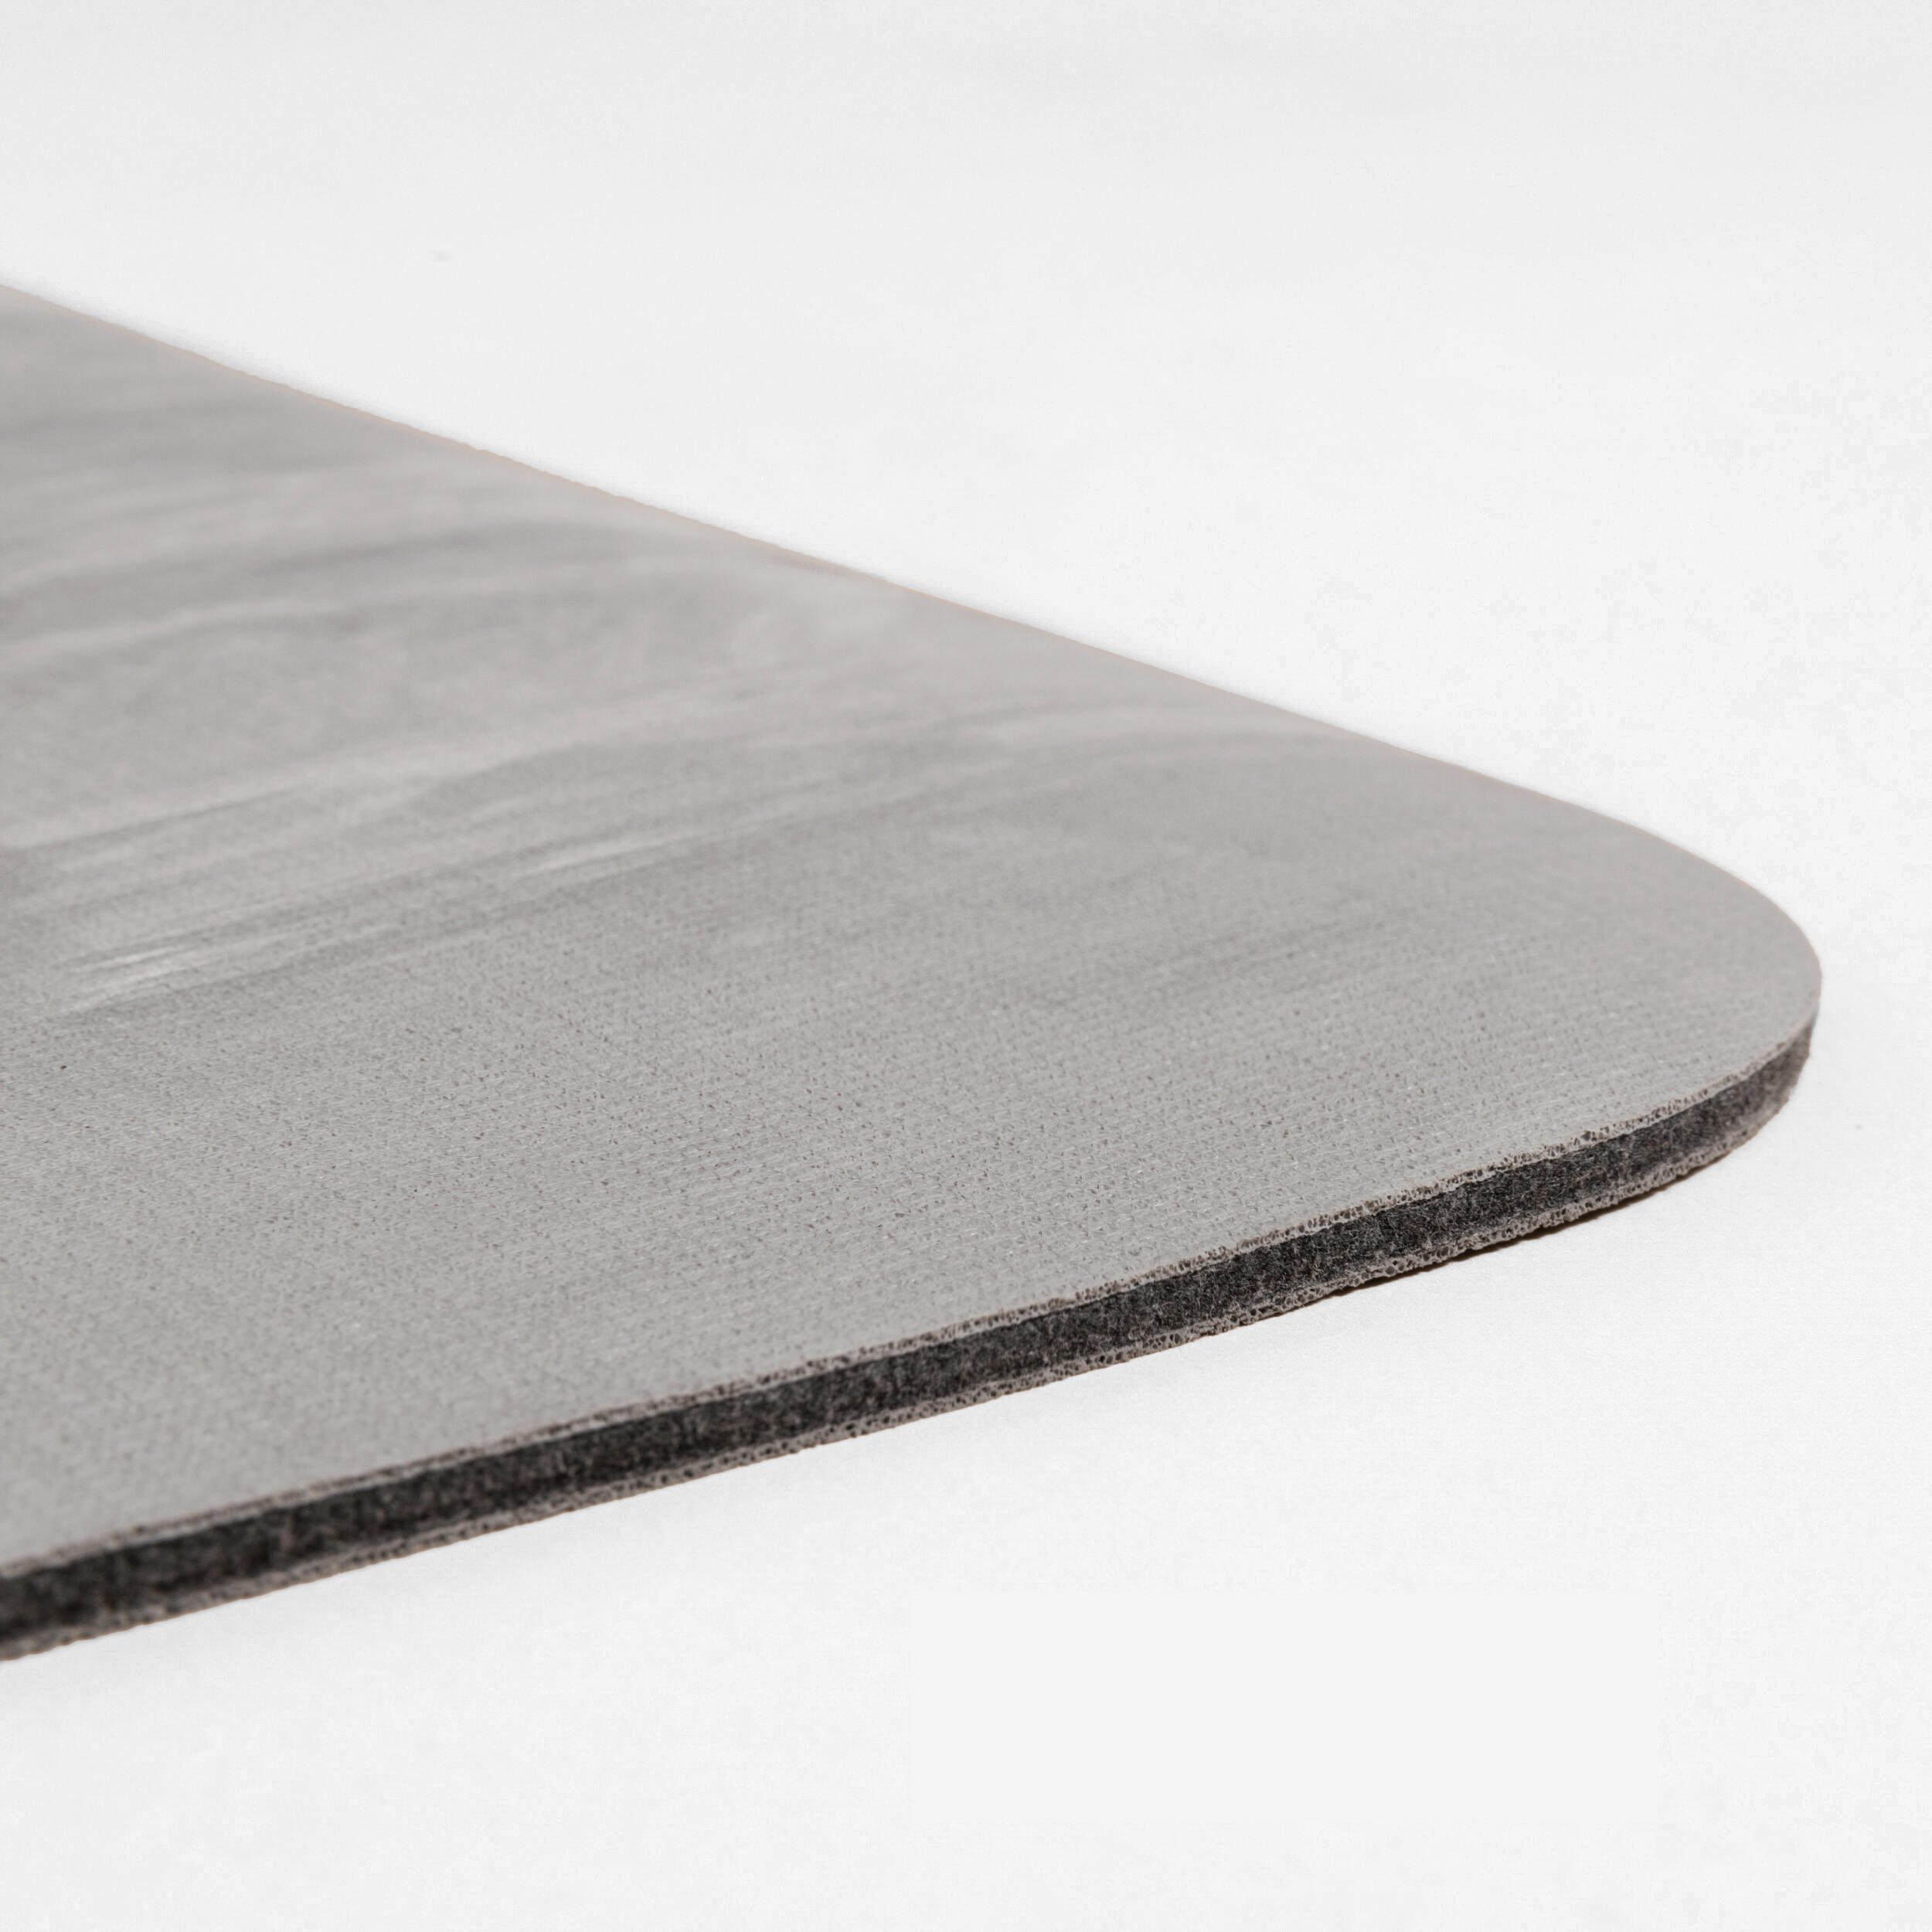 185 x 65 cm x 5 mm Yoga Mat Grip - Grey 5/5